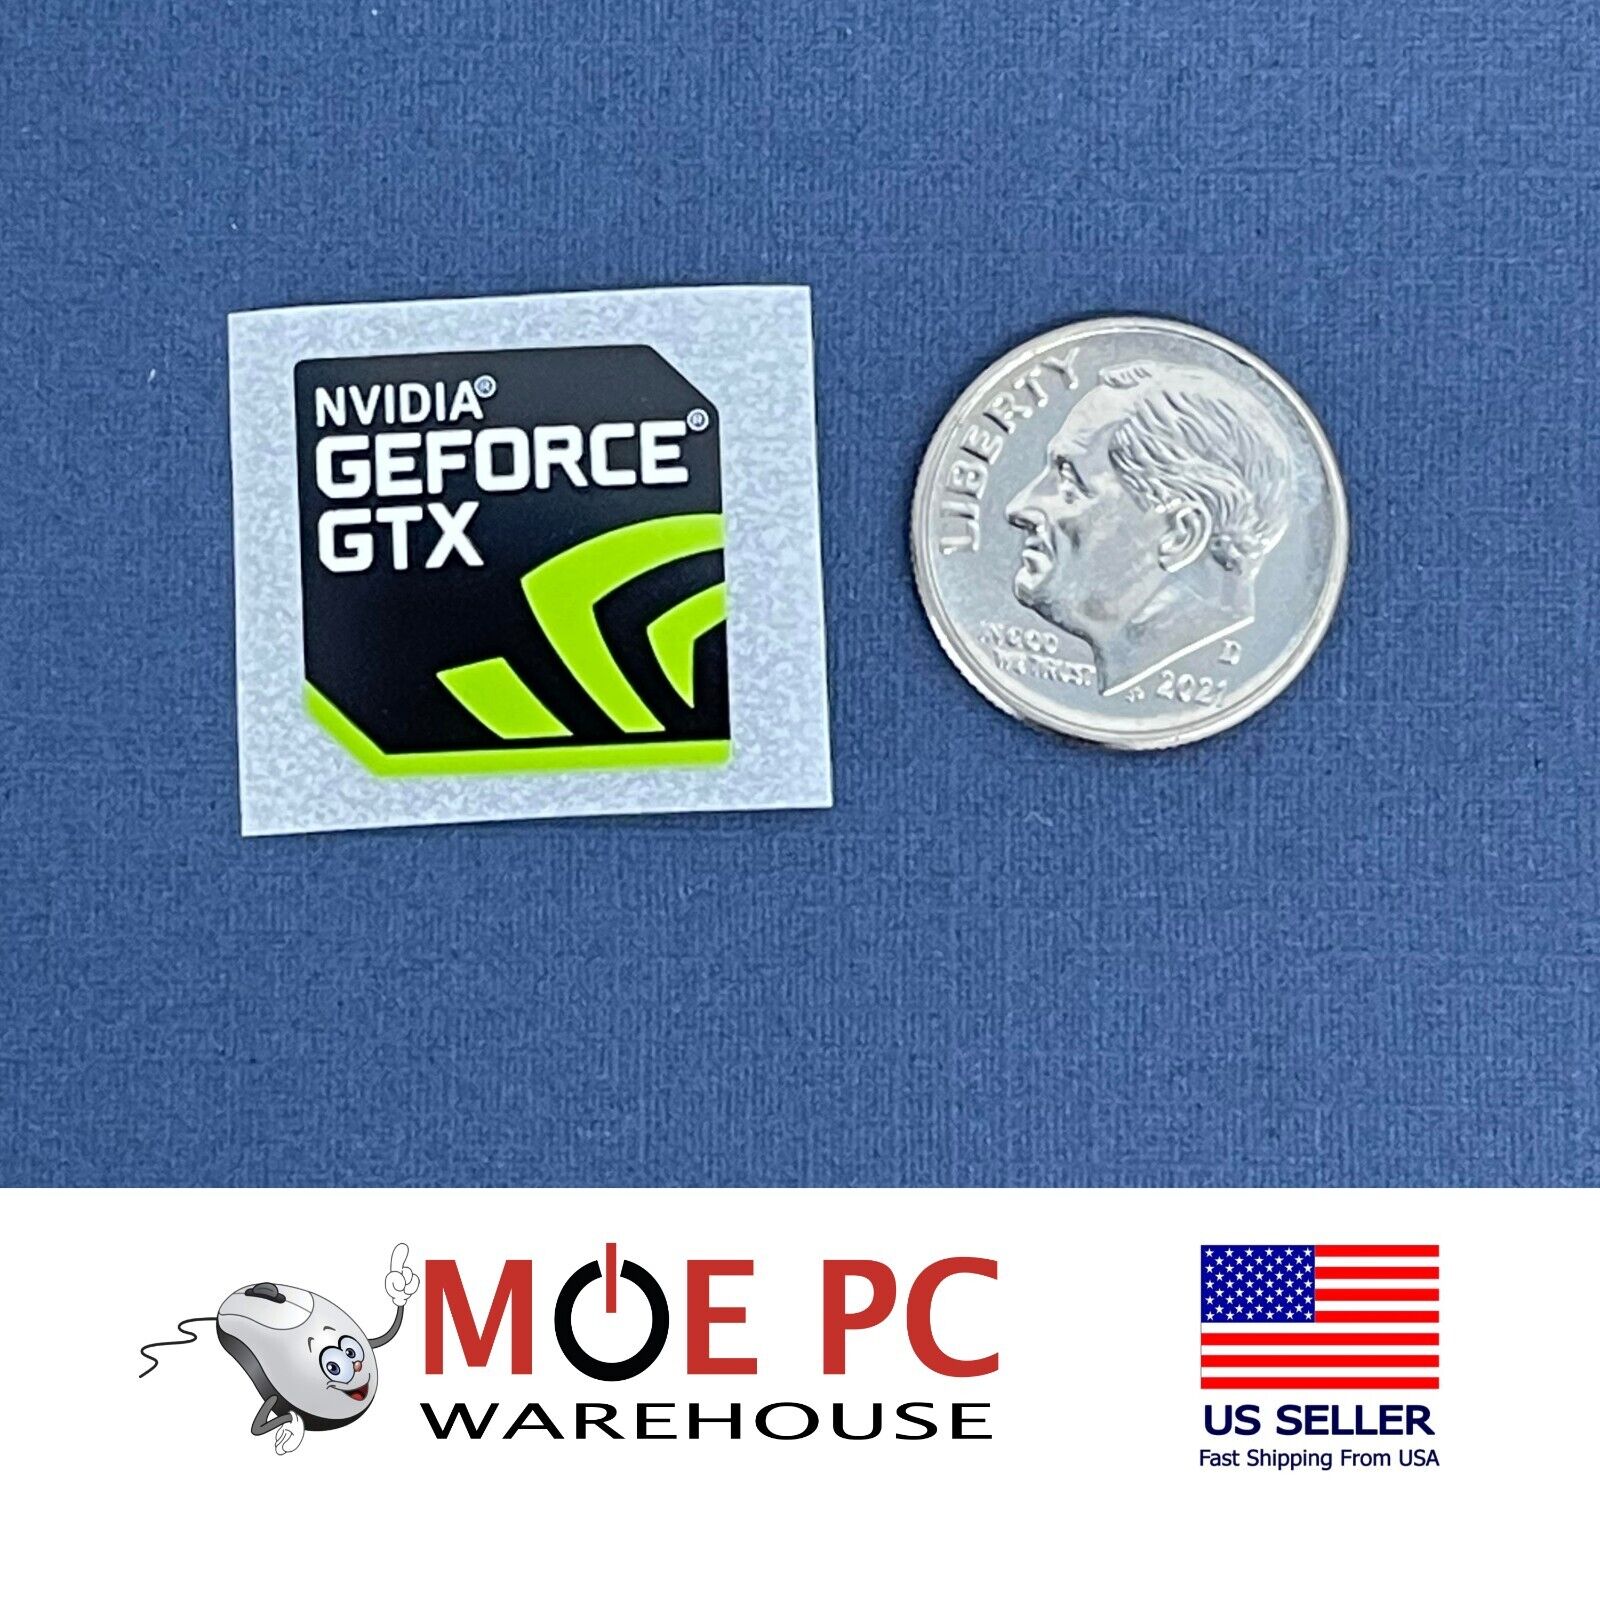 NVIDIA GEFORCE GTC Genuine LOGO STICKER/LABEL Excellent Quality (USA Seller)